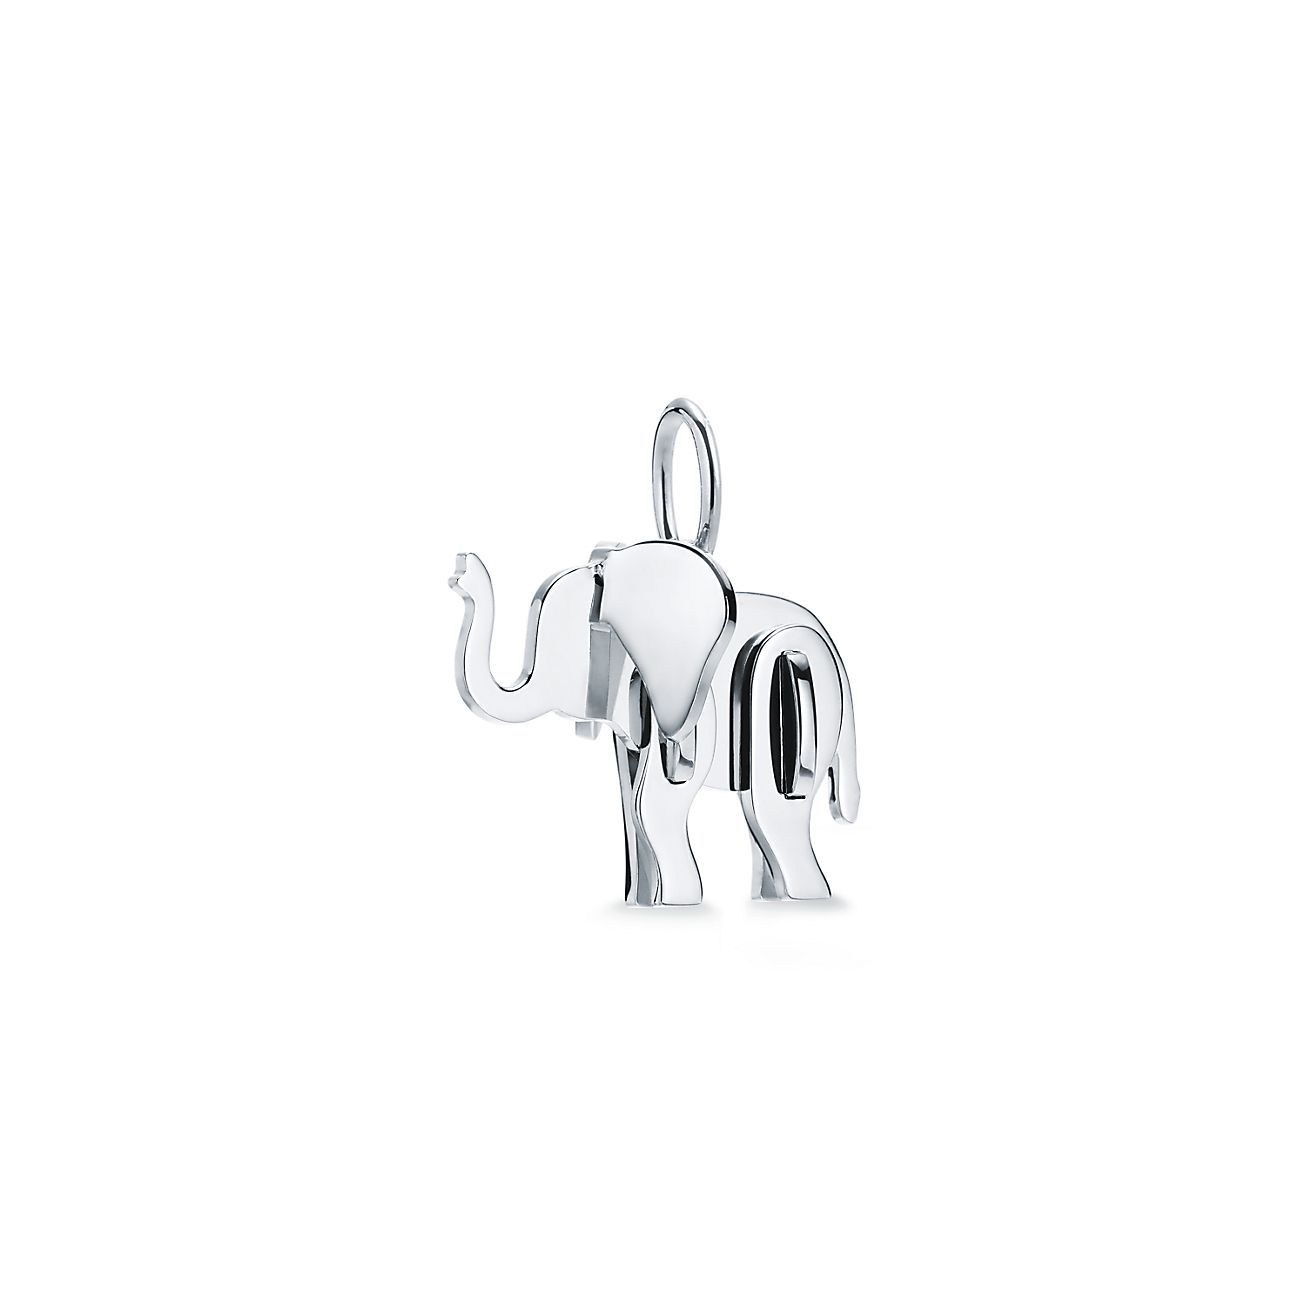 tiffany necklace elephant